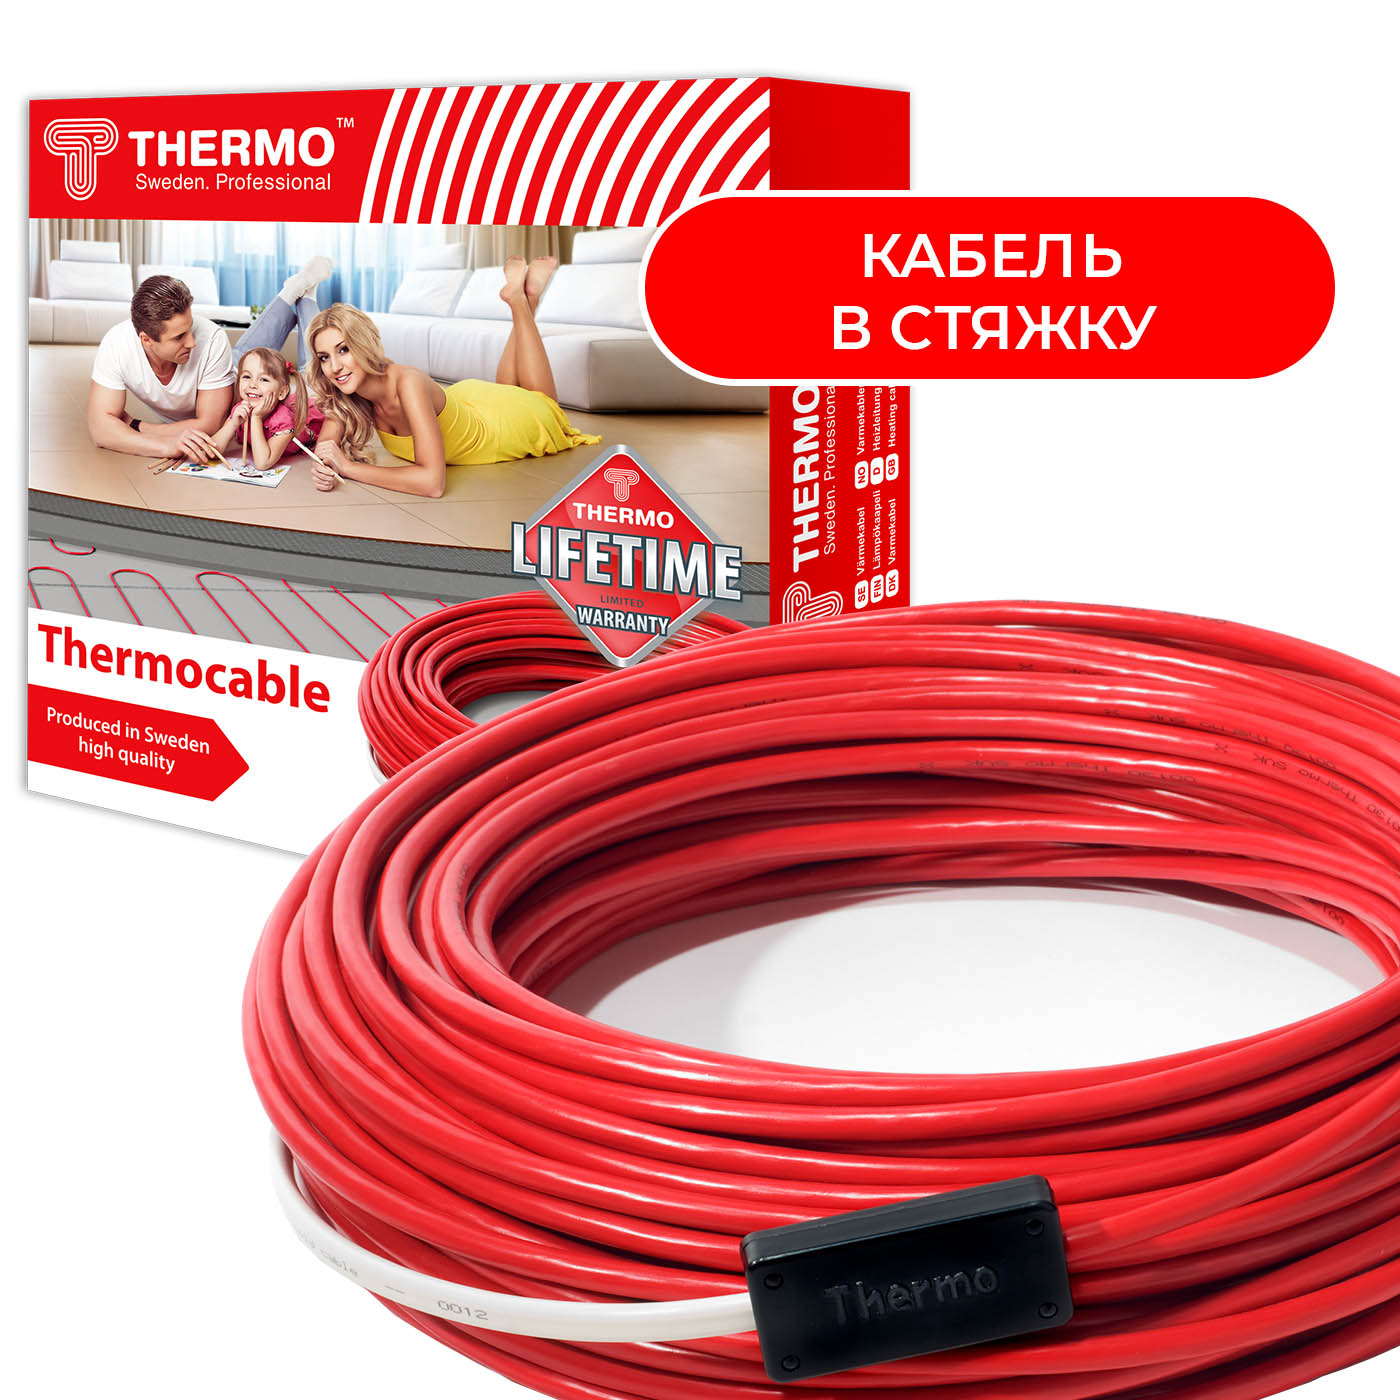 Thermocable l Греющий кабель в стяжку от бренда Thermo